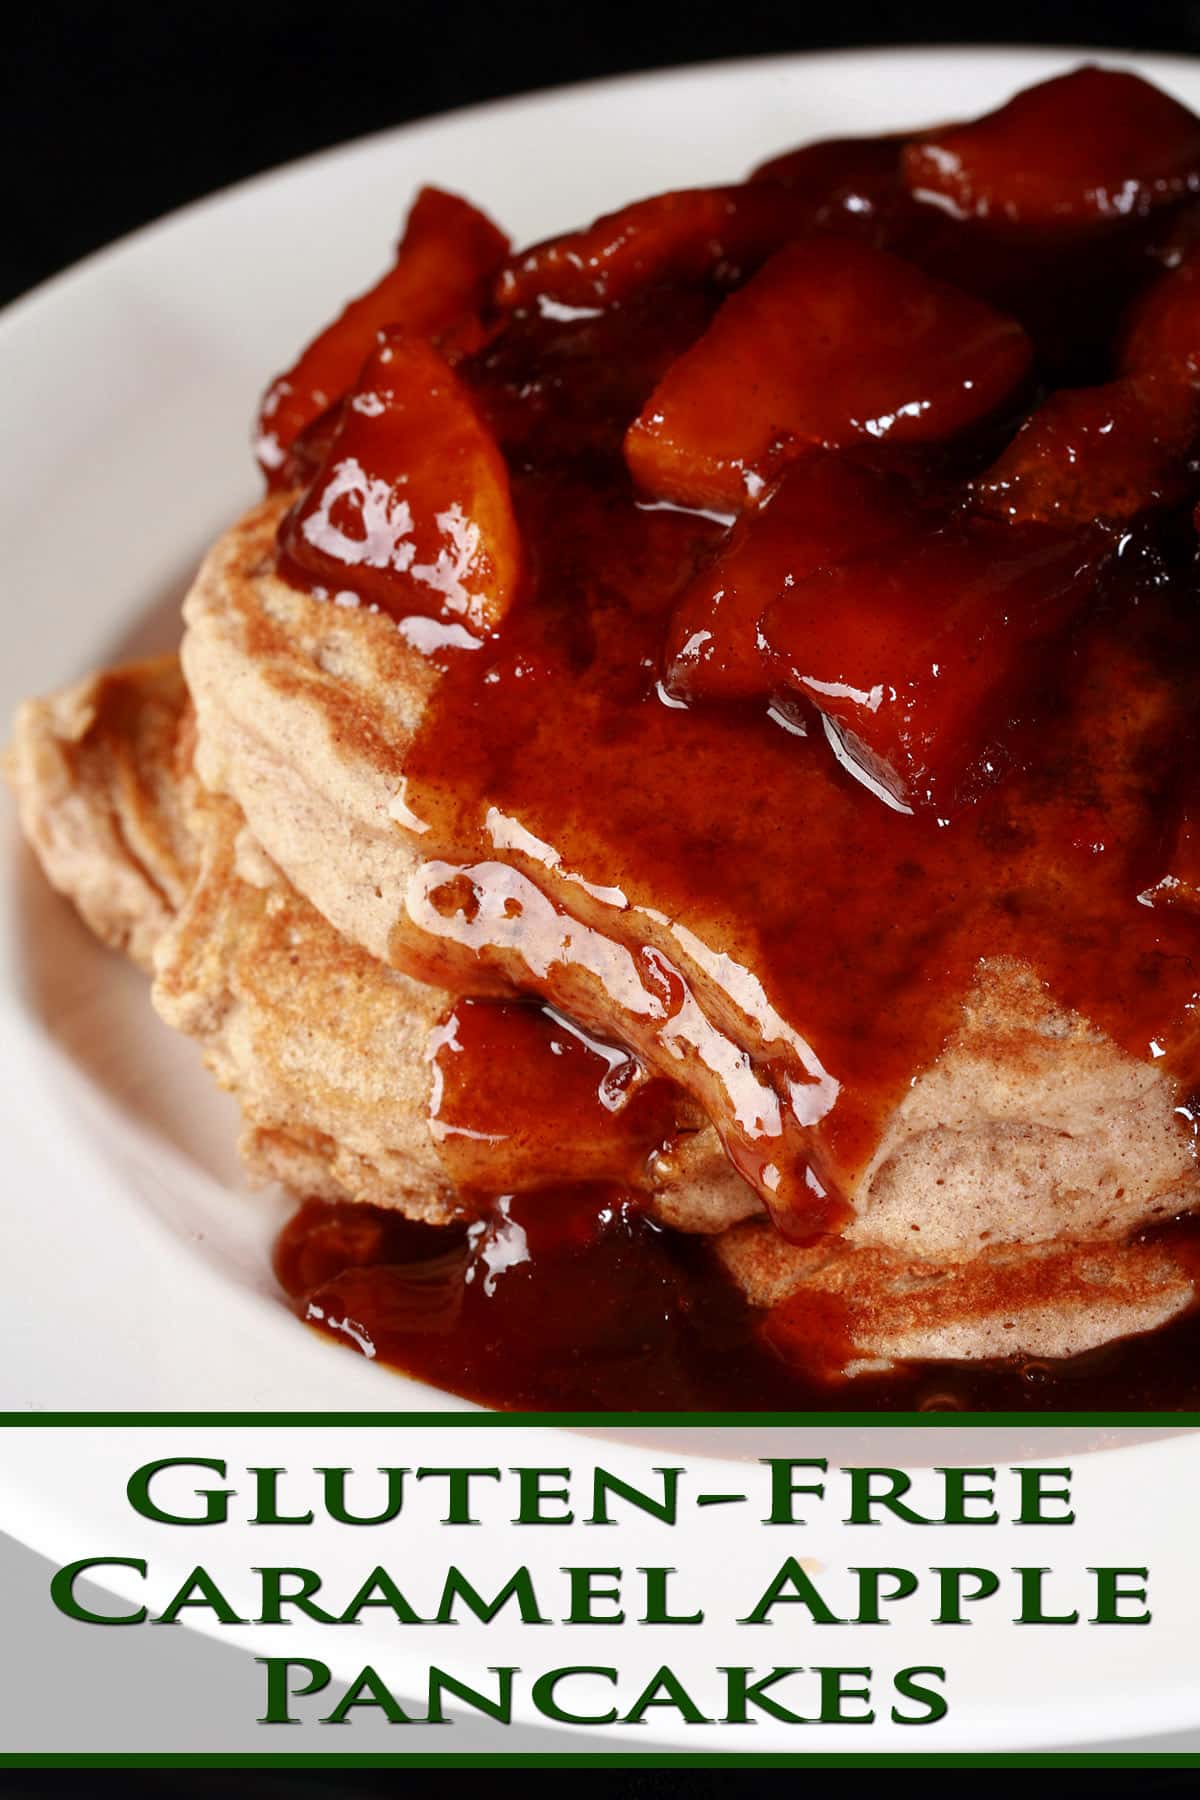 A stack of gluten-free caramel apple pancakes.